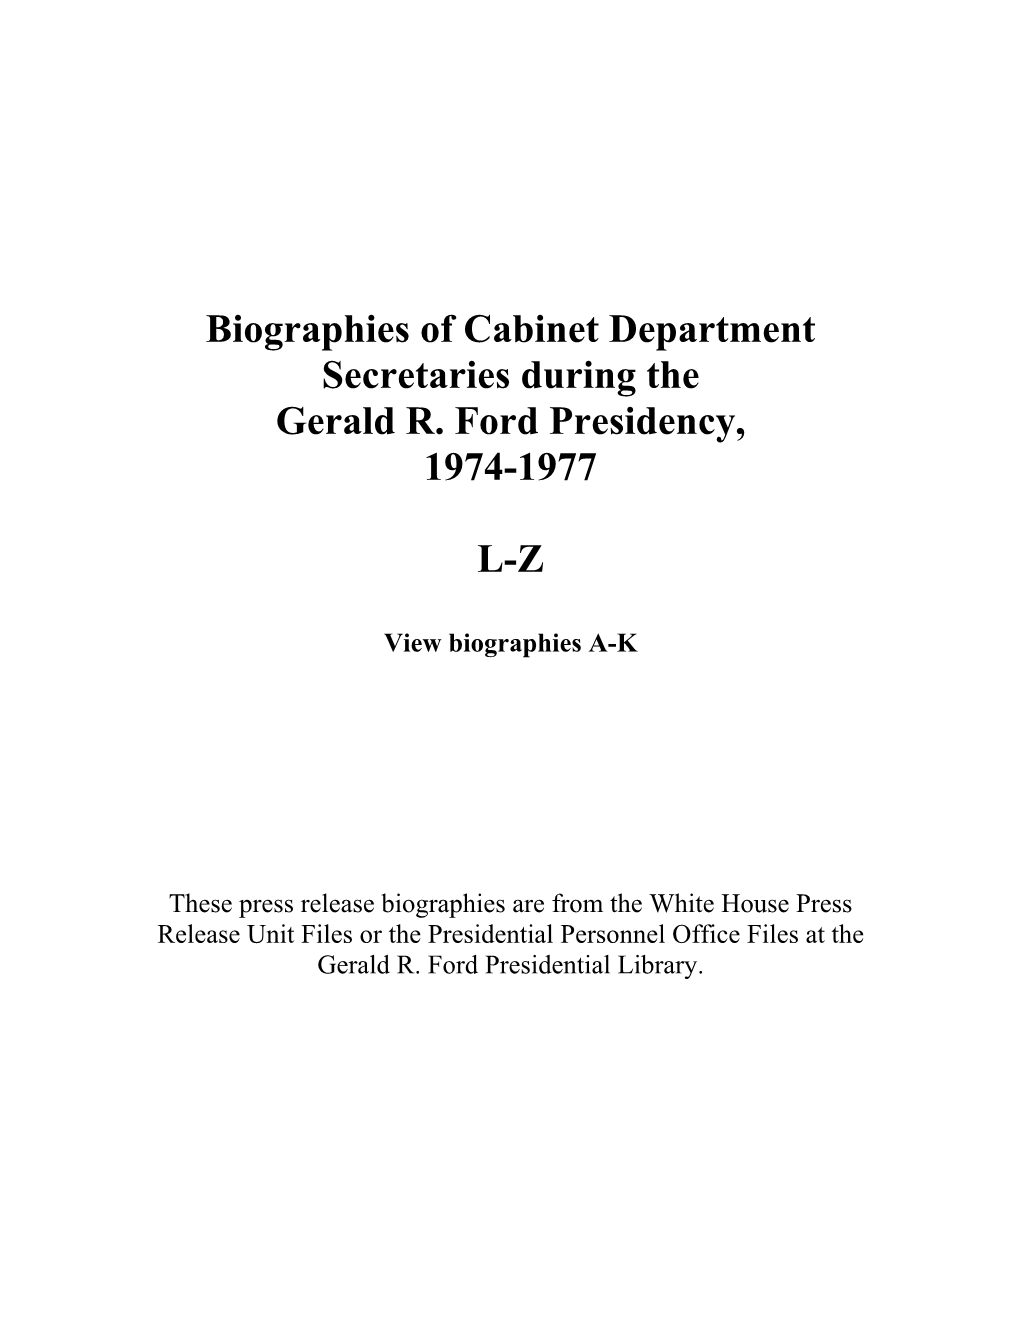 Biographies of Ford Cabinet Department Secretaries